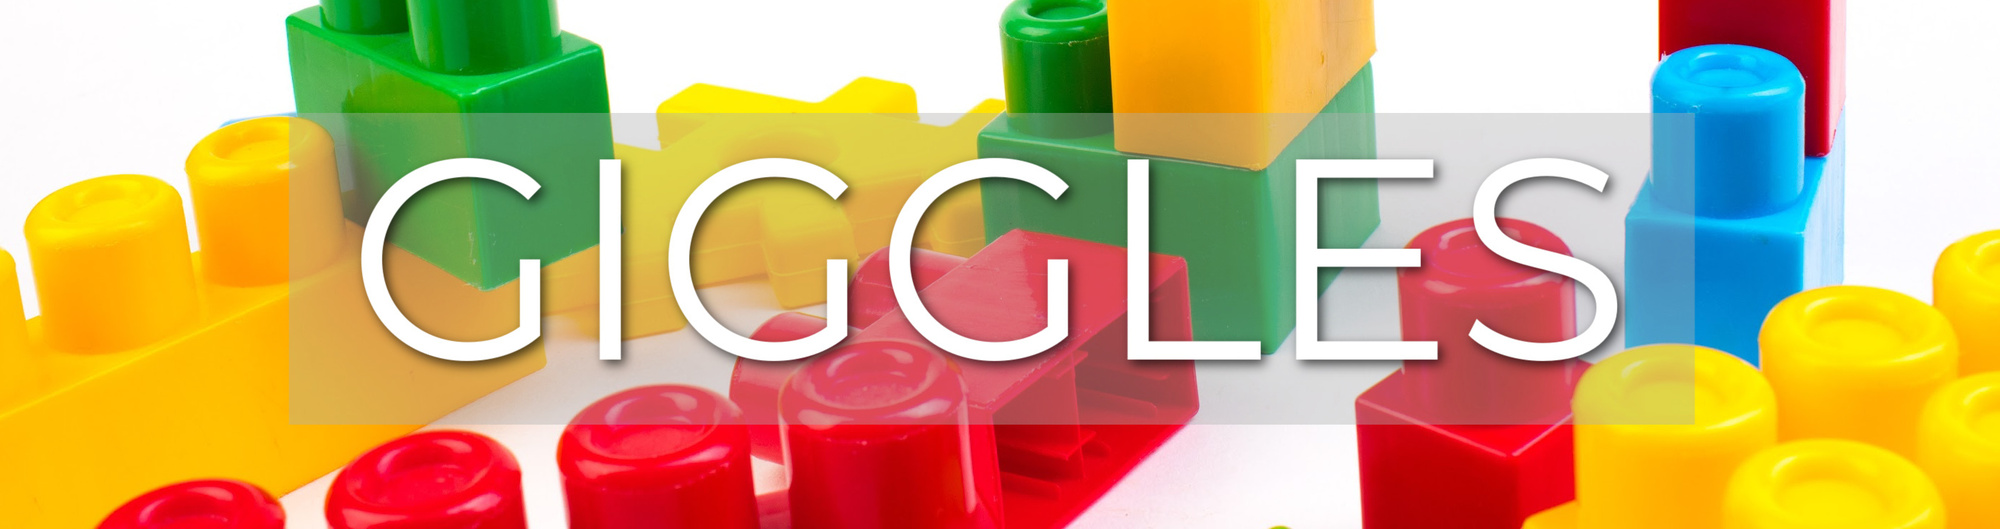 Giggles playgroup on background of large multi coloured lego